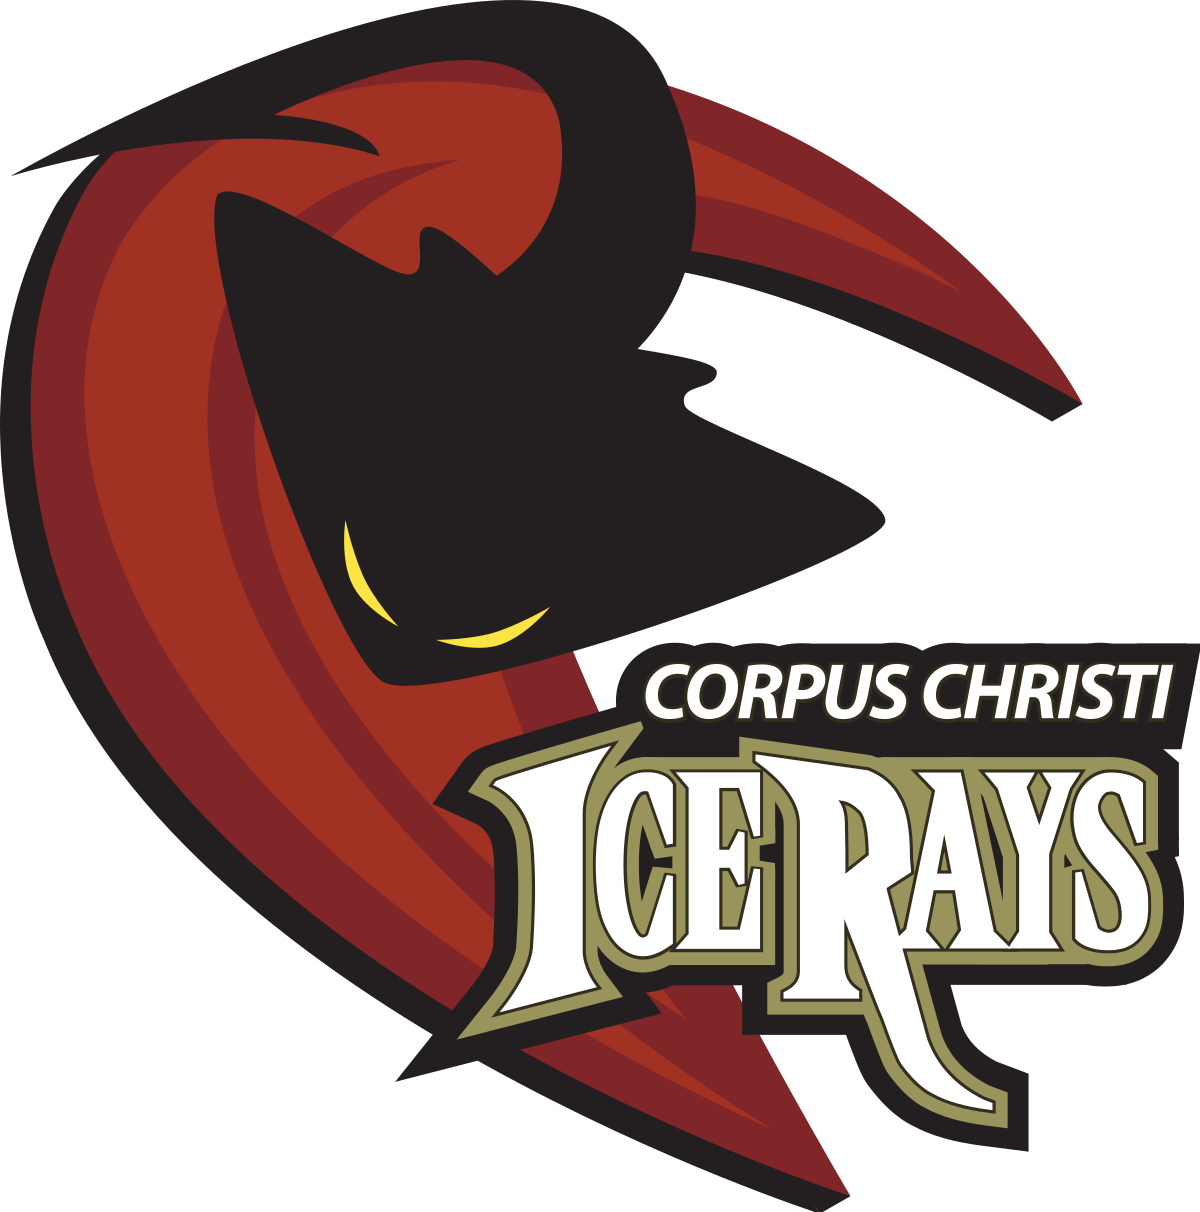 Corpus Christi Ice Rays logo